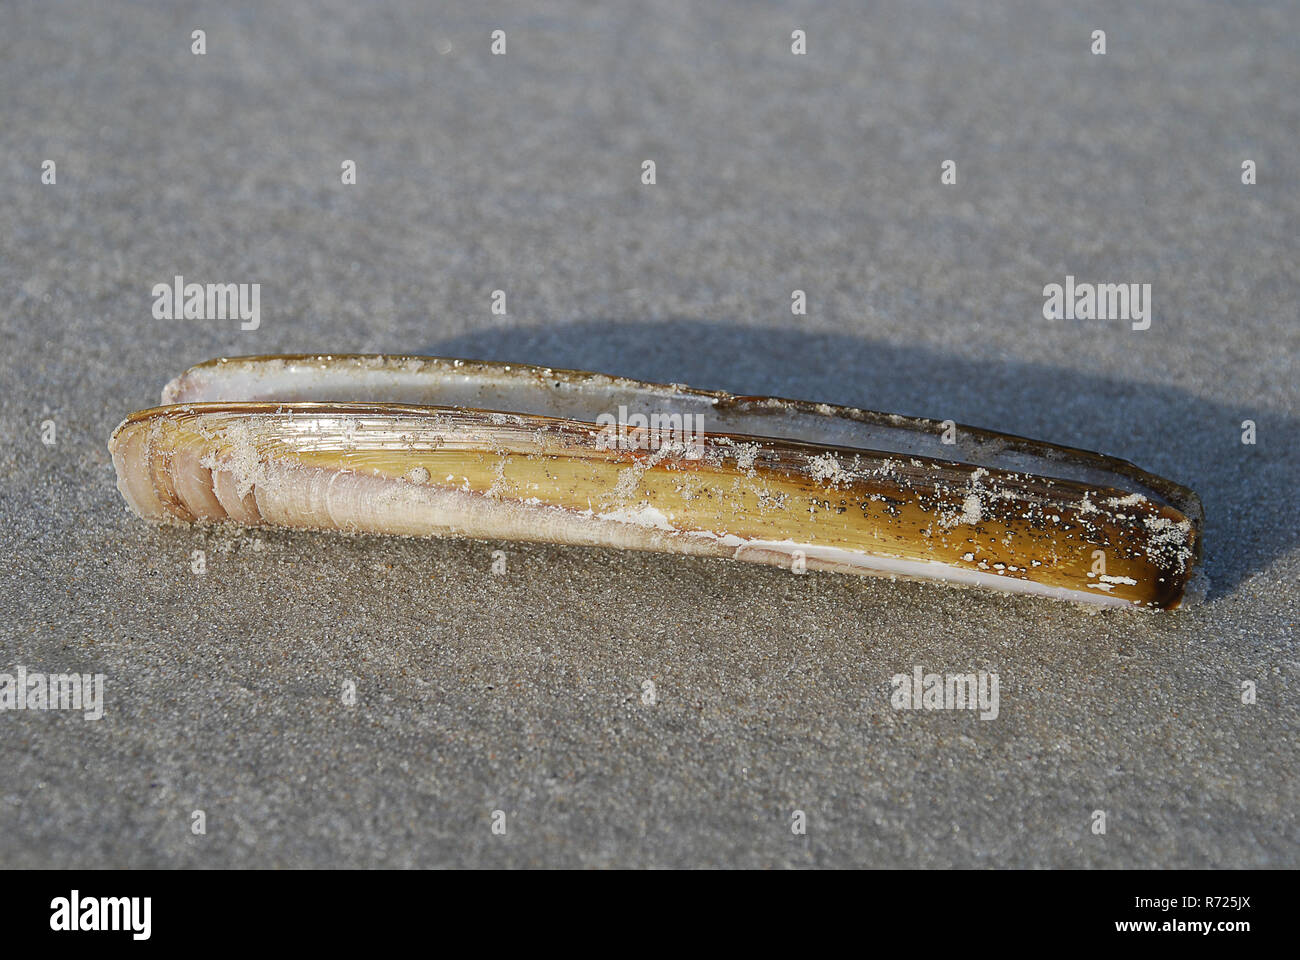 Atlantic jackknife Clam, Ensis directus, auch wie der Bambus clam, Amerikanische jackknife Clam oder Razor clam bekannt Stockfoto